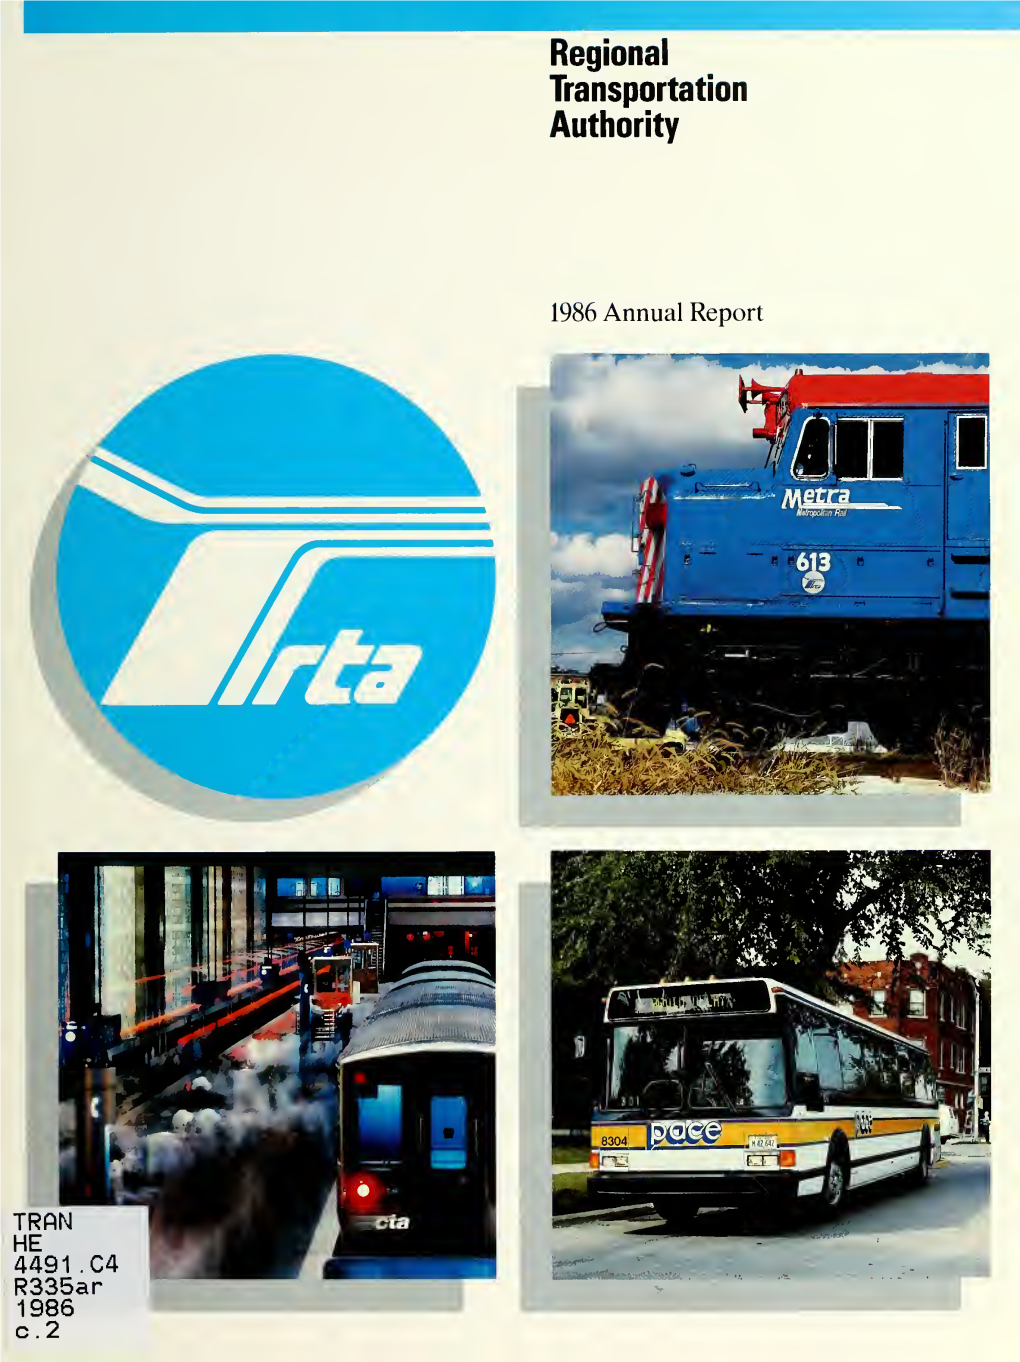 Regional Transportation Authority 1986 Annual Report